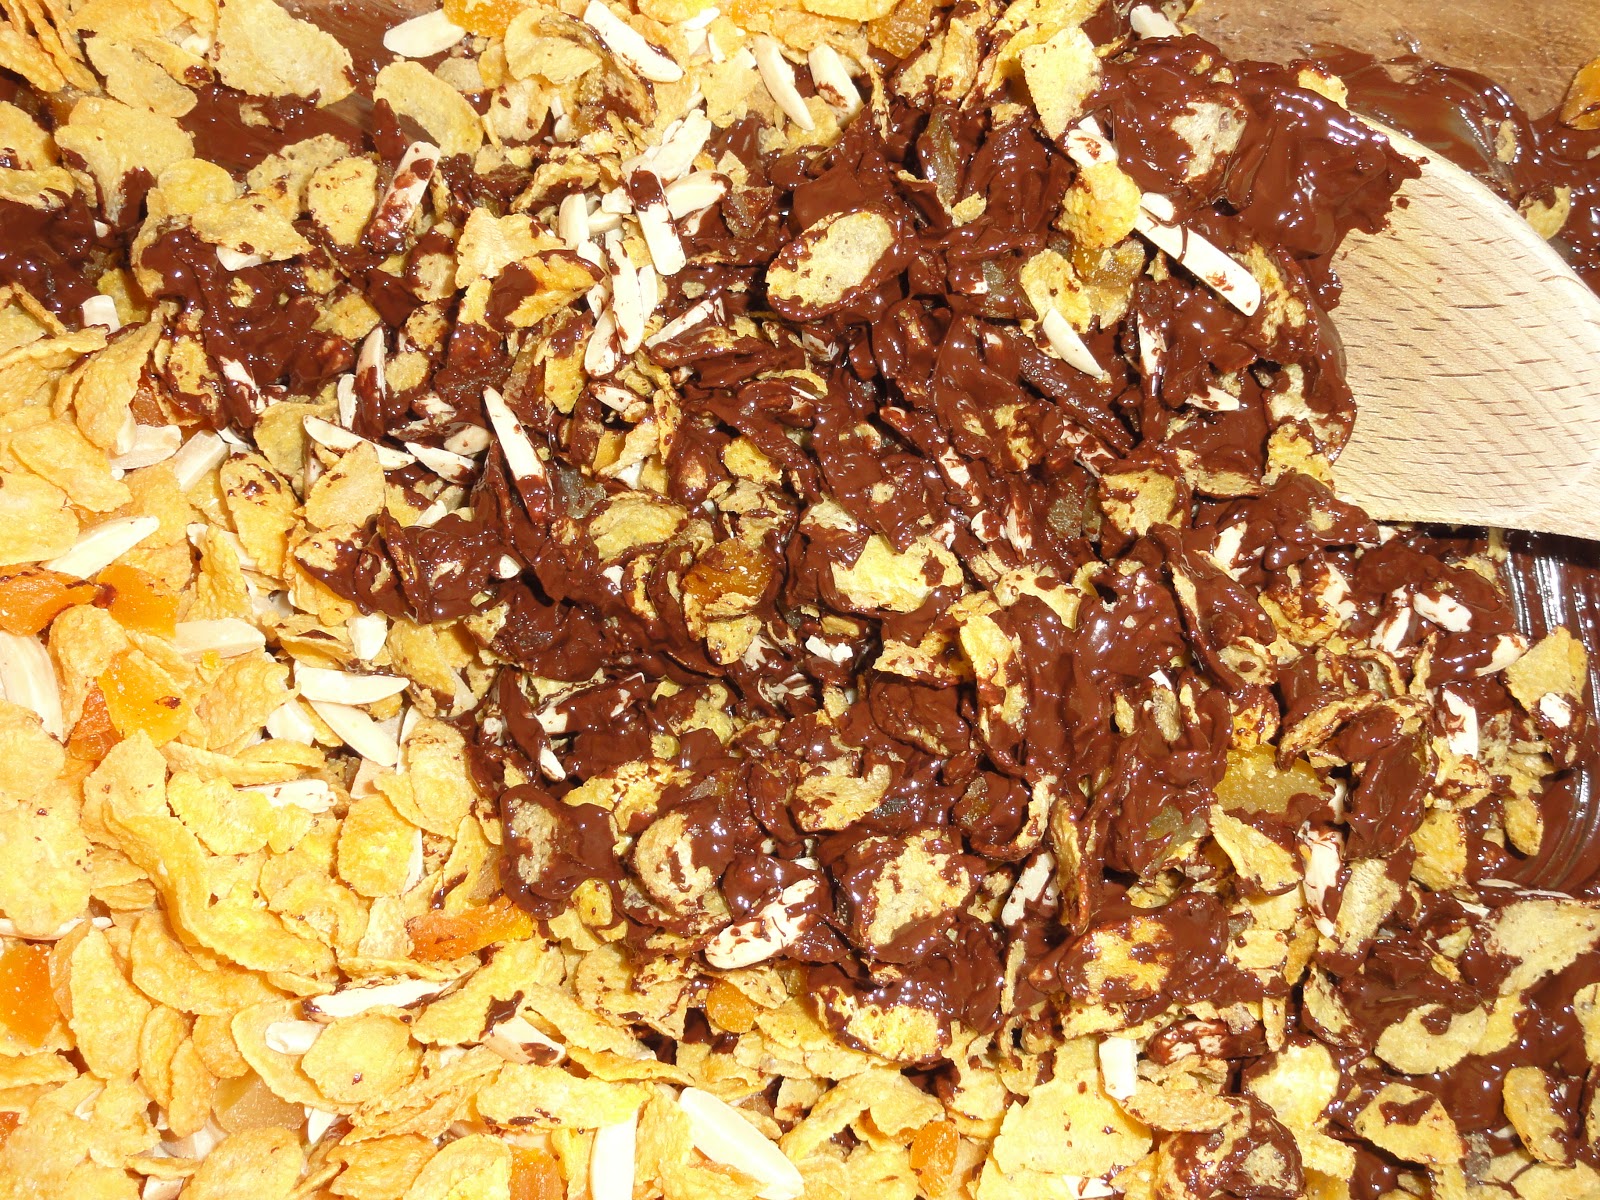 echte hausfrau: schokoladen crossies / choco crossies recipe